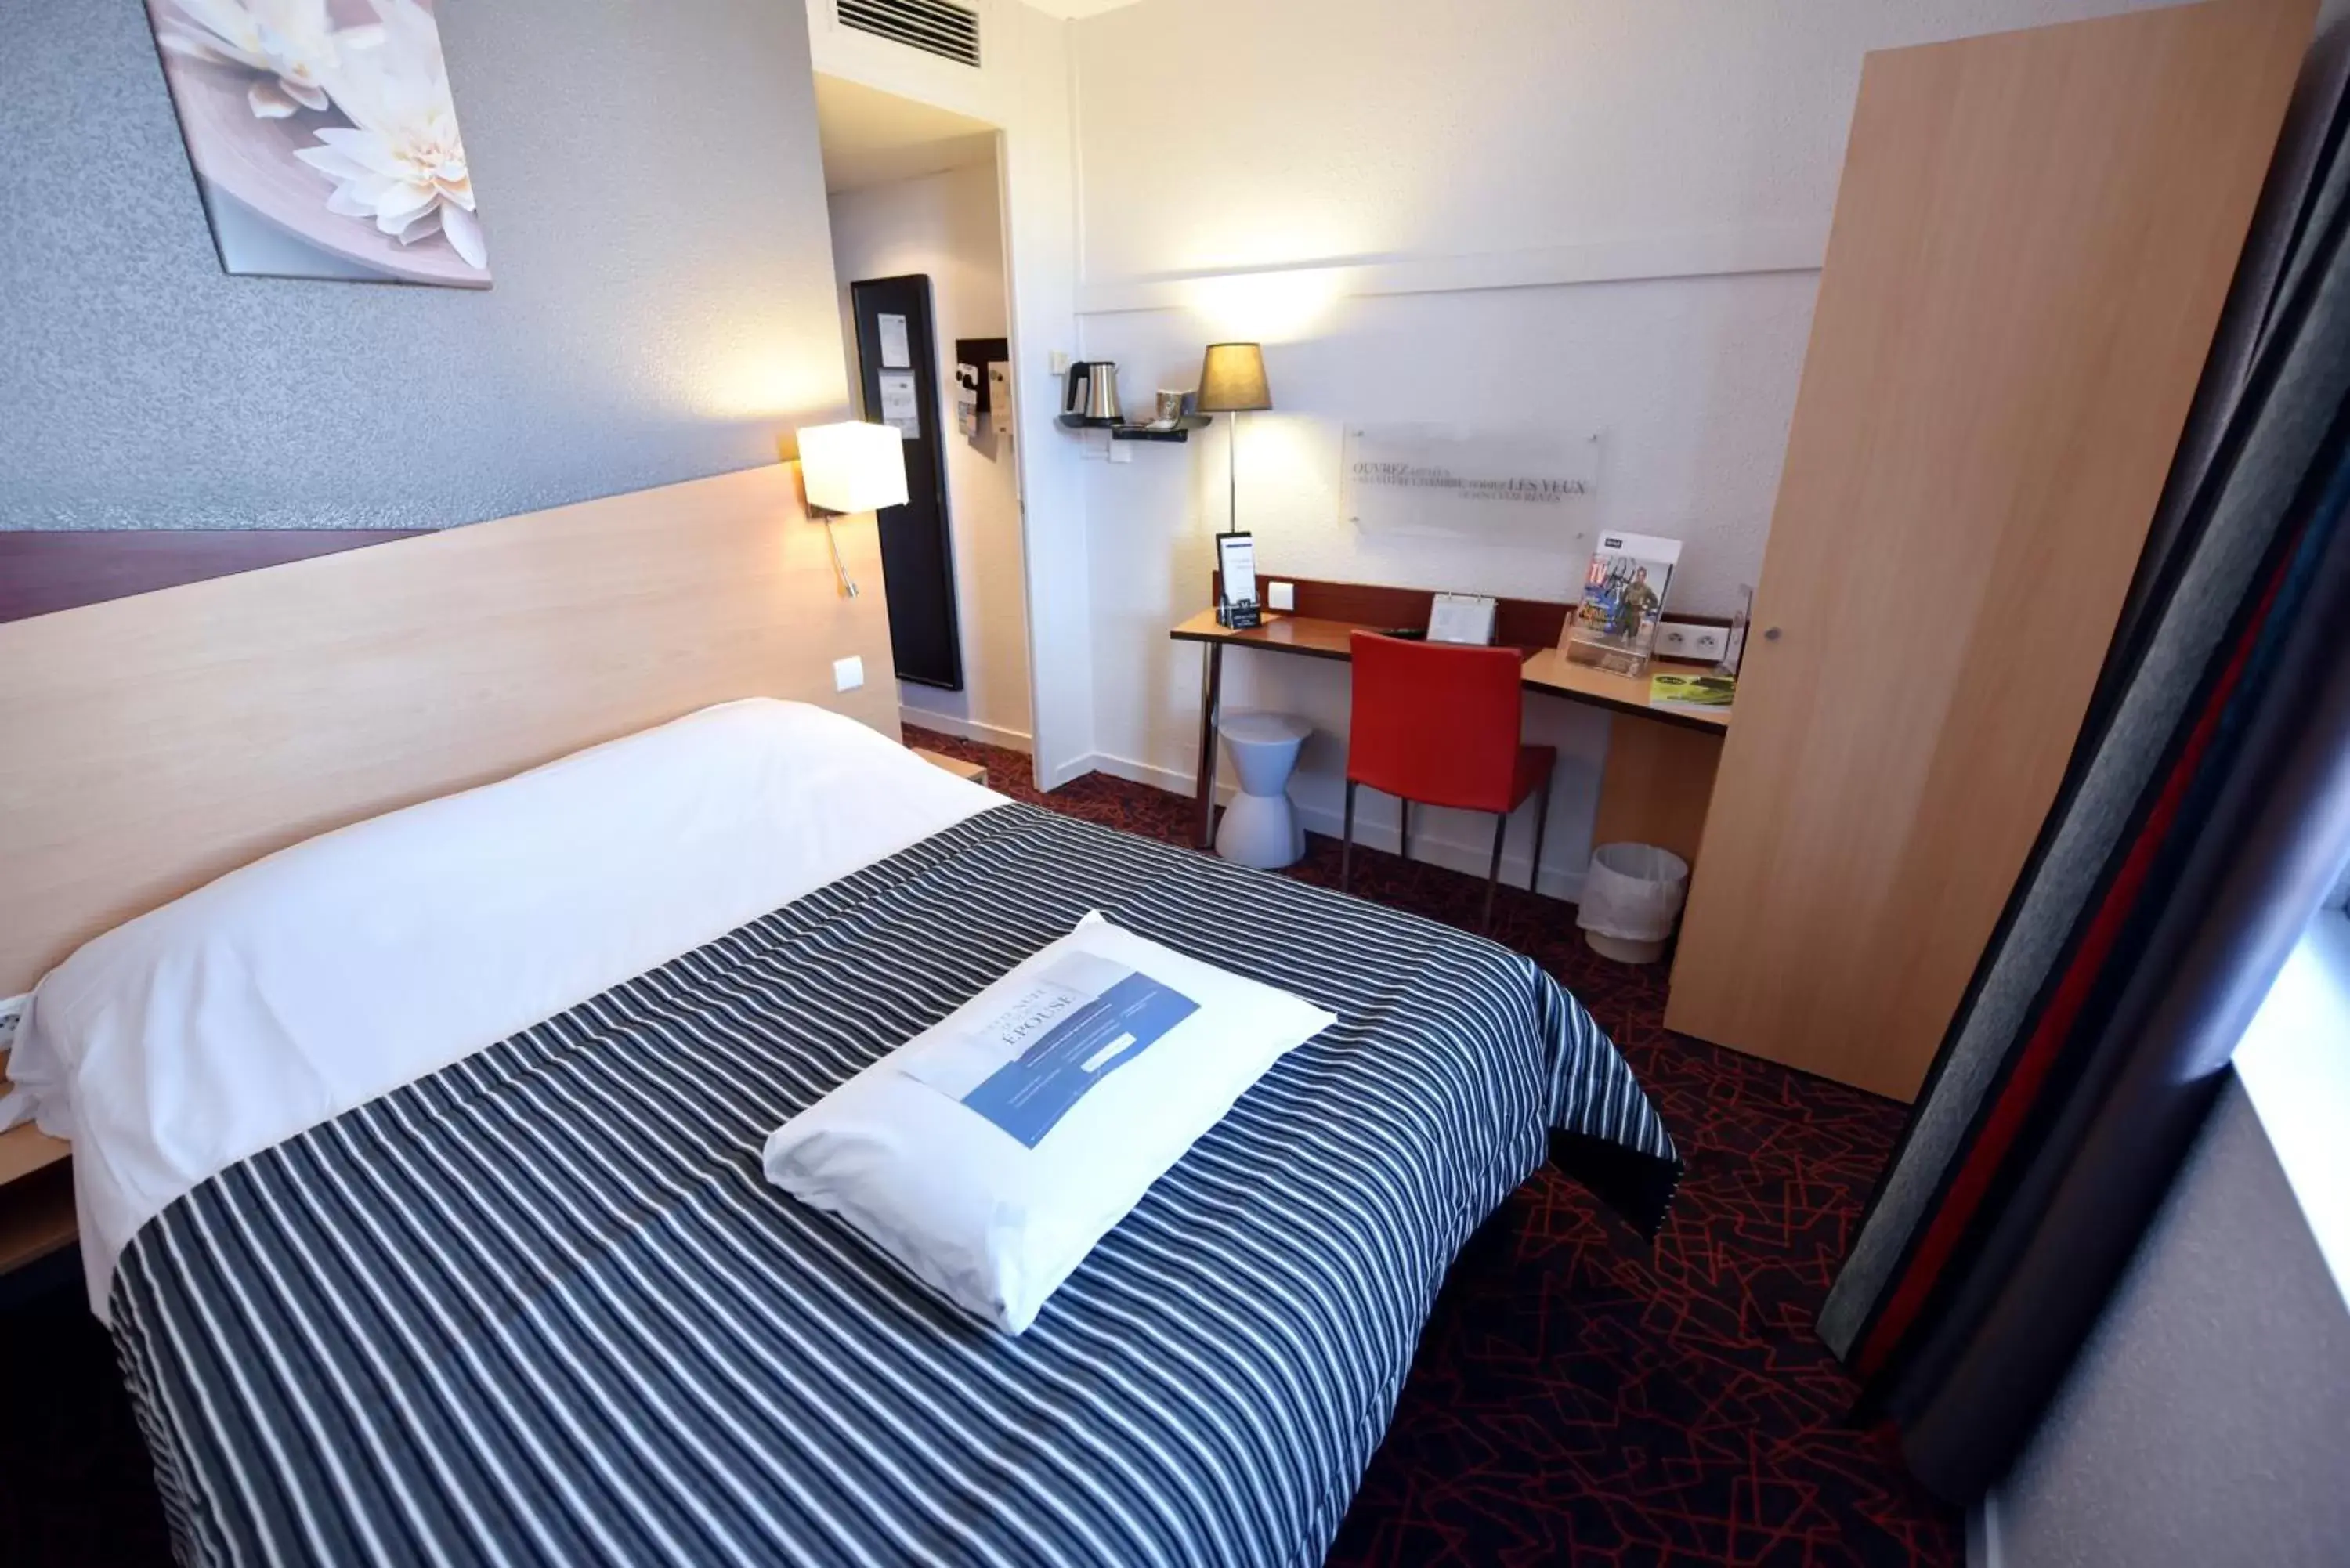 Bedroom in Kyriad Hotel Dijon Gare